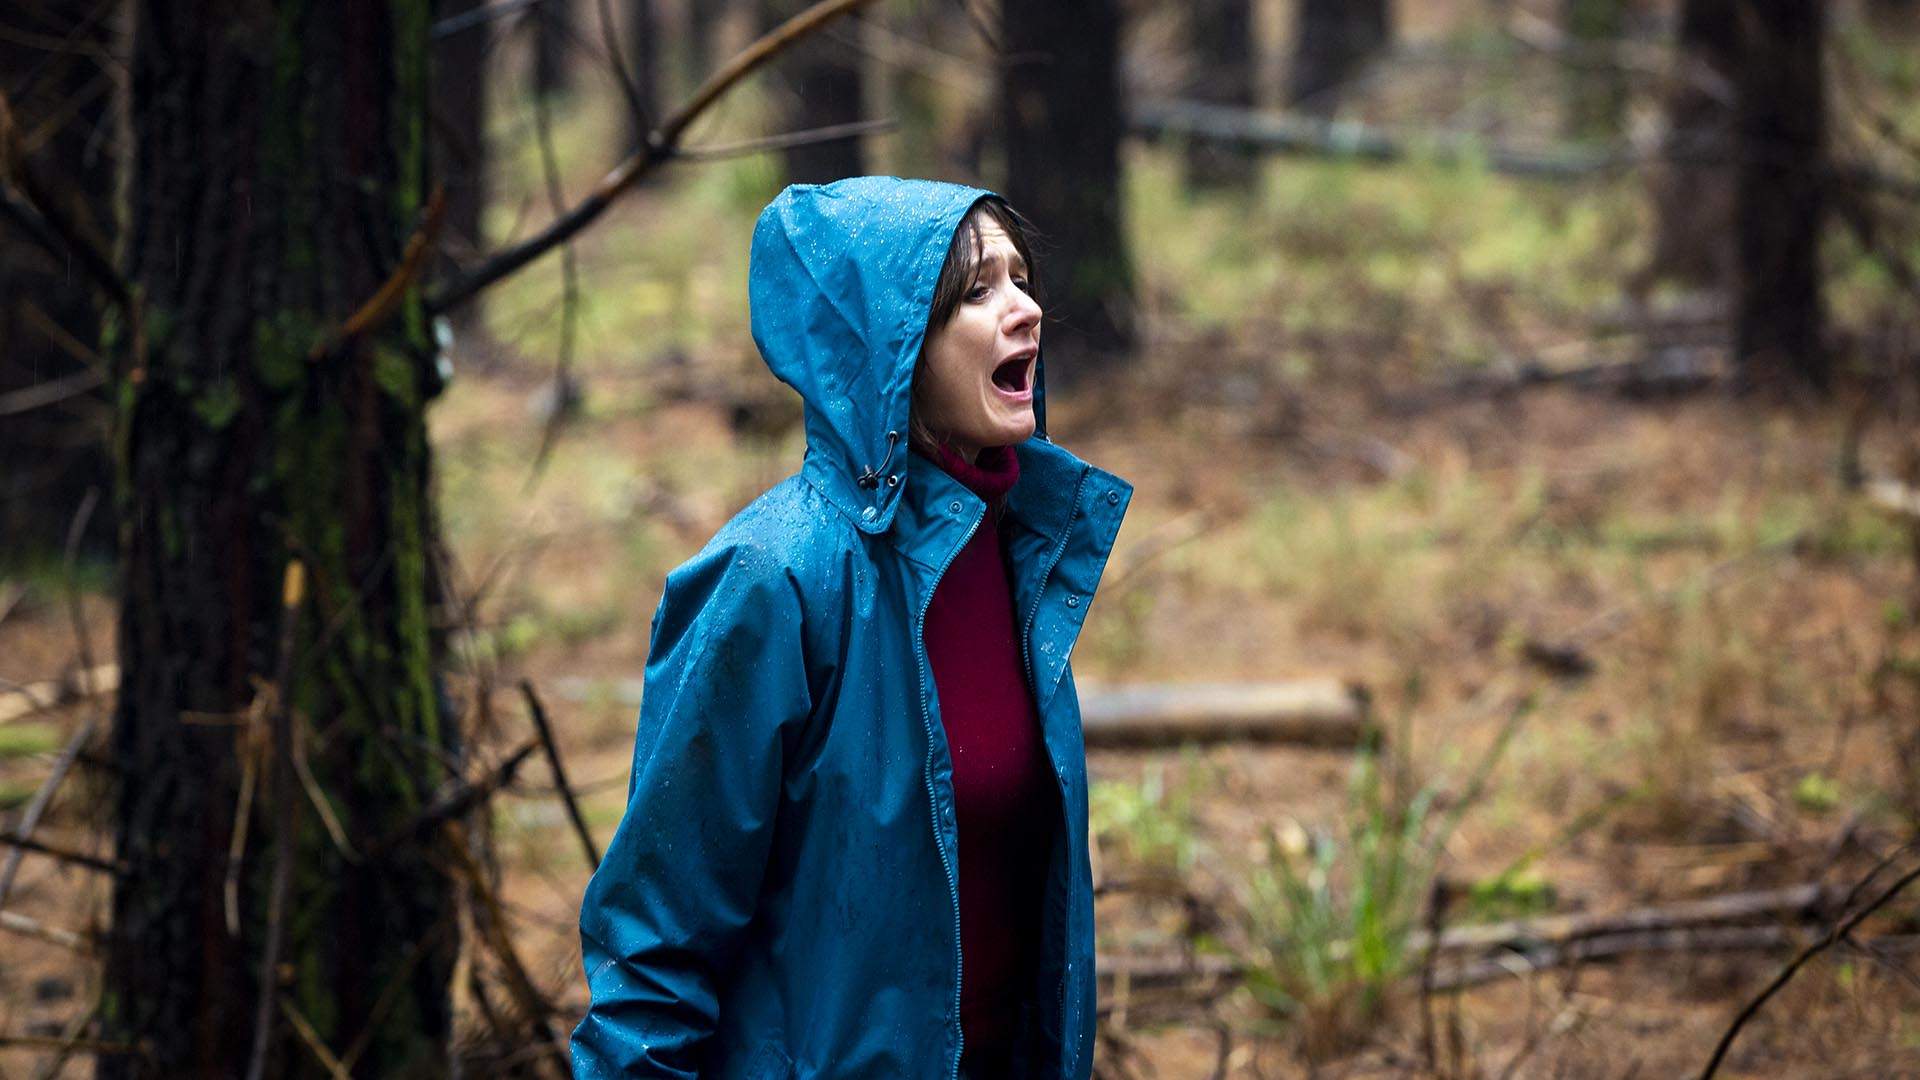 The Trailer for Eerie and Unnerving New Australian Horror Film 'Relic